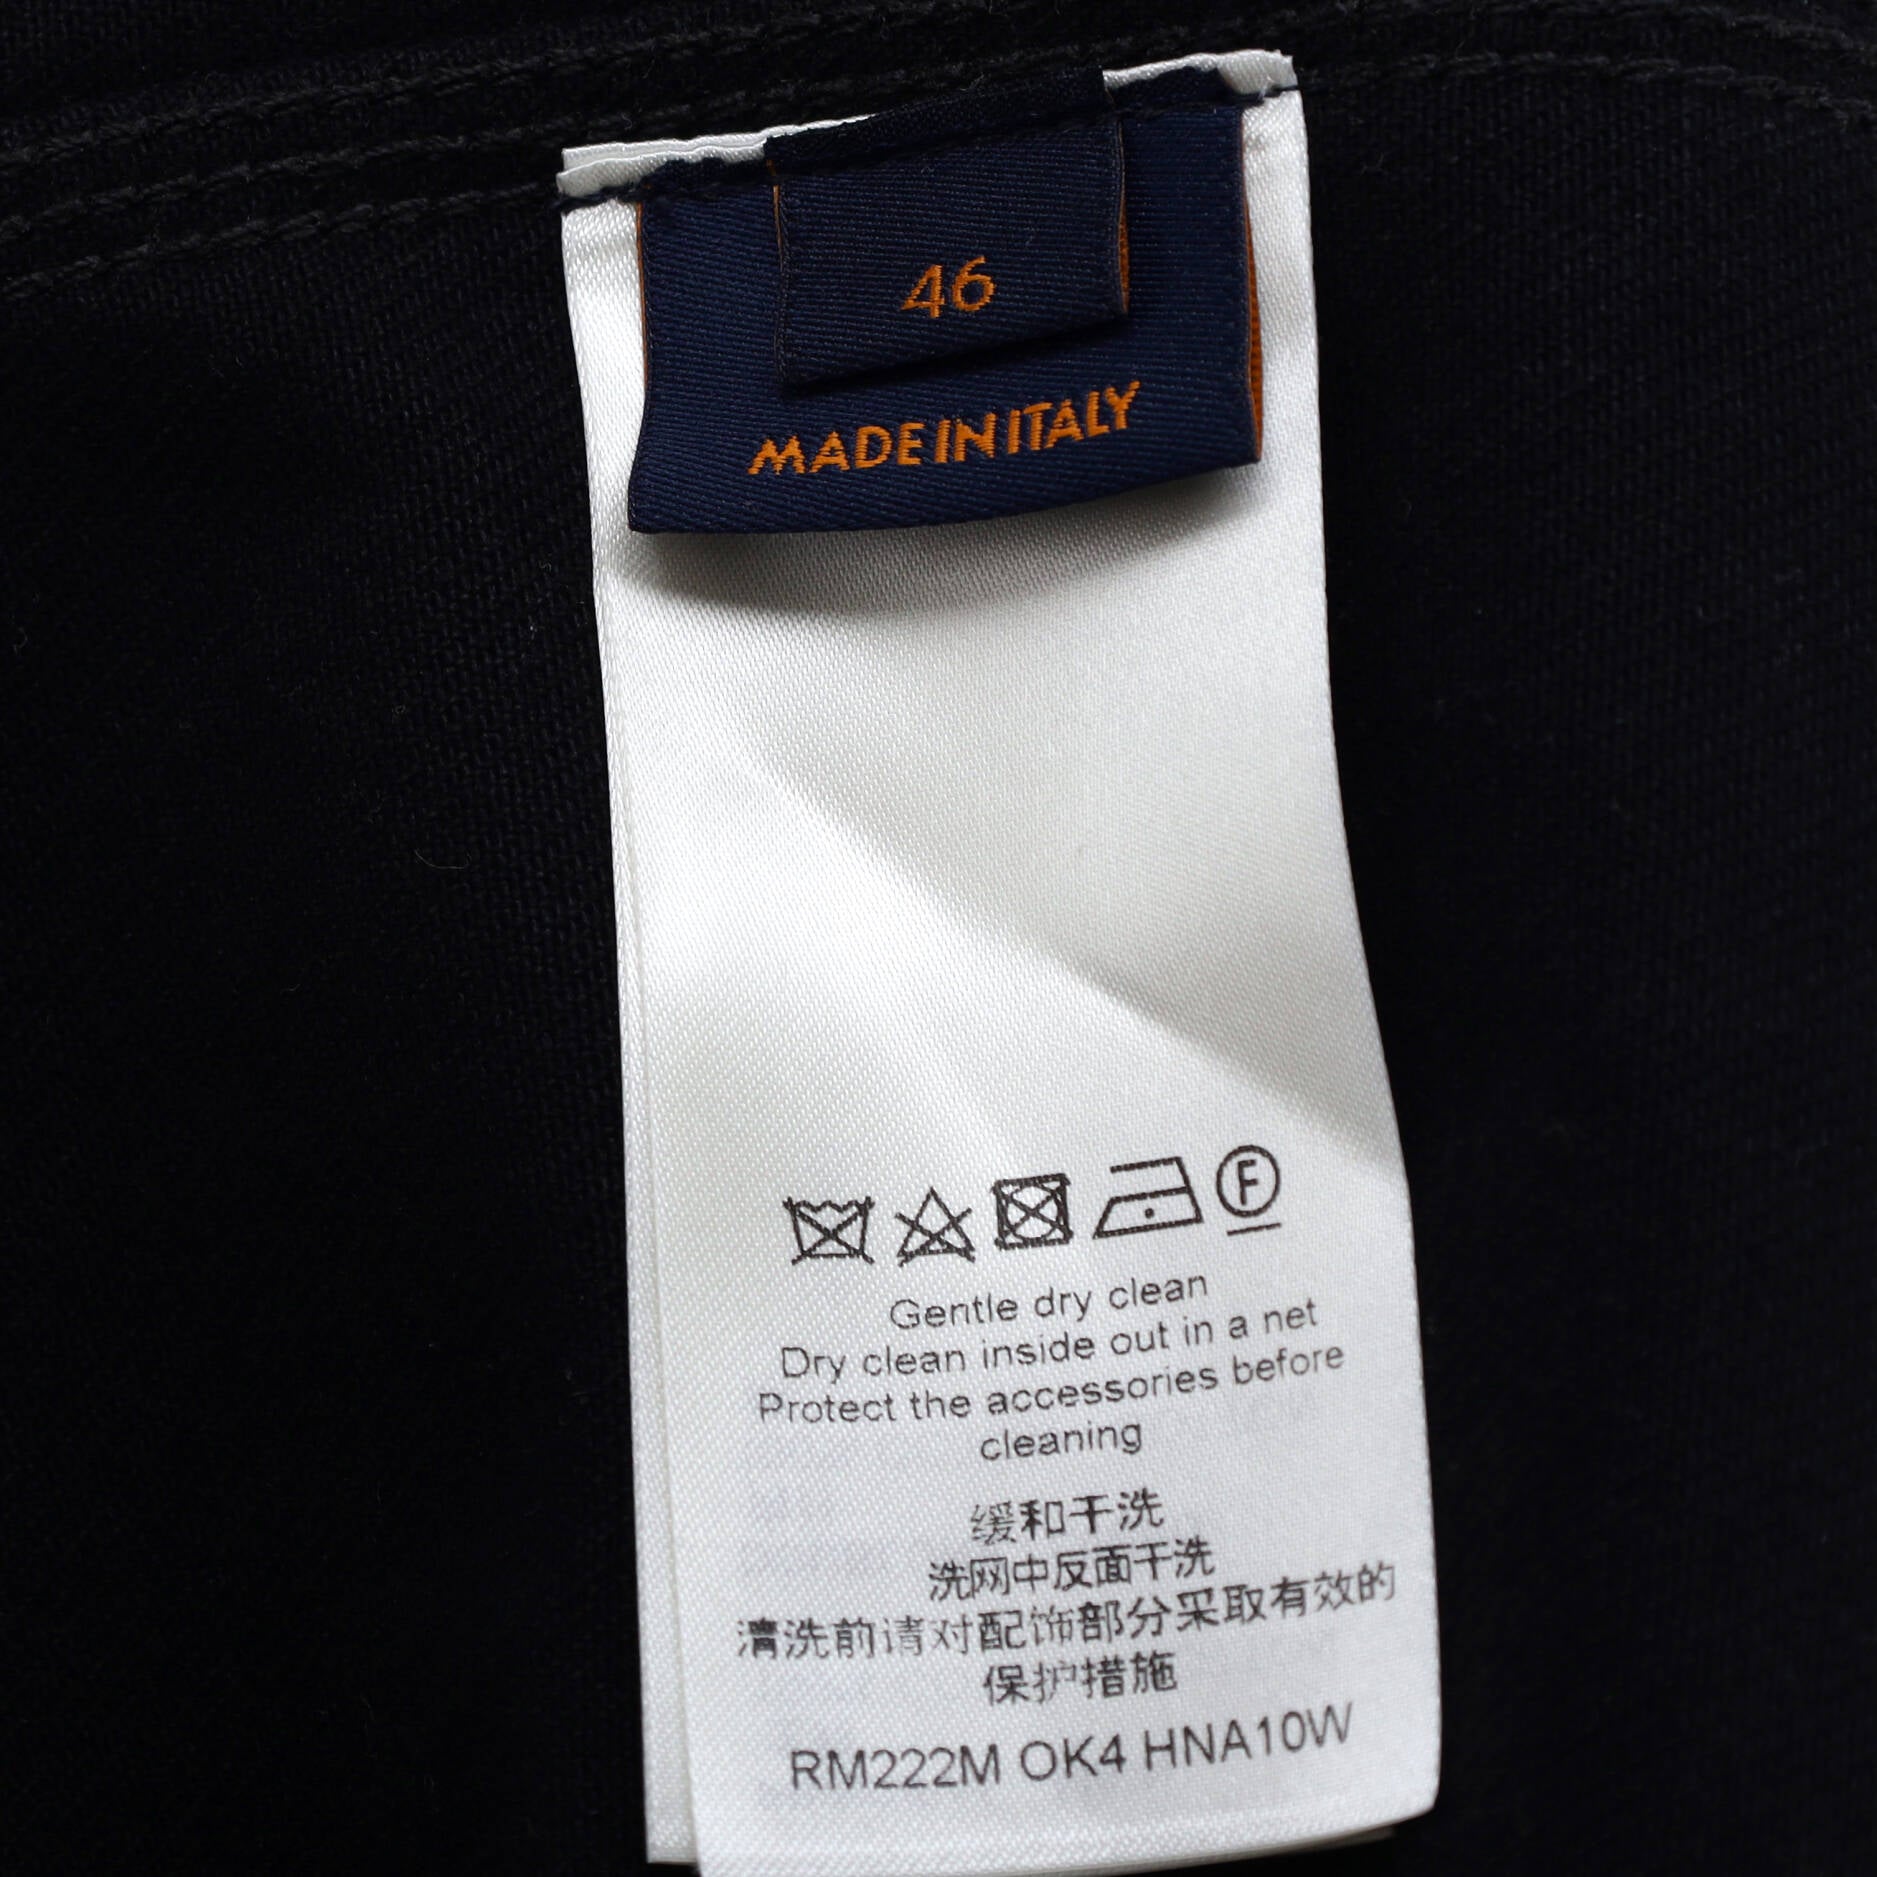 Louis Vuitton Men's Bandana Mix Blouson Monogram Denim and Leather